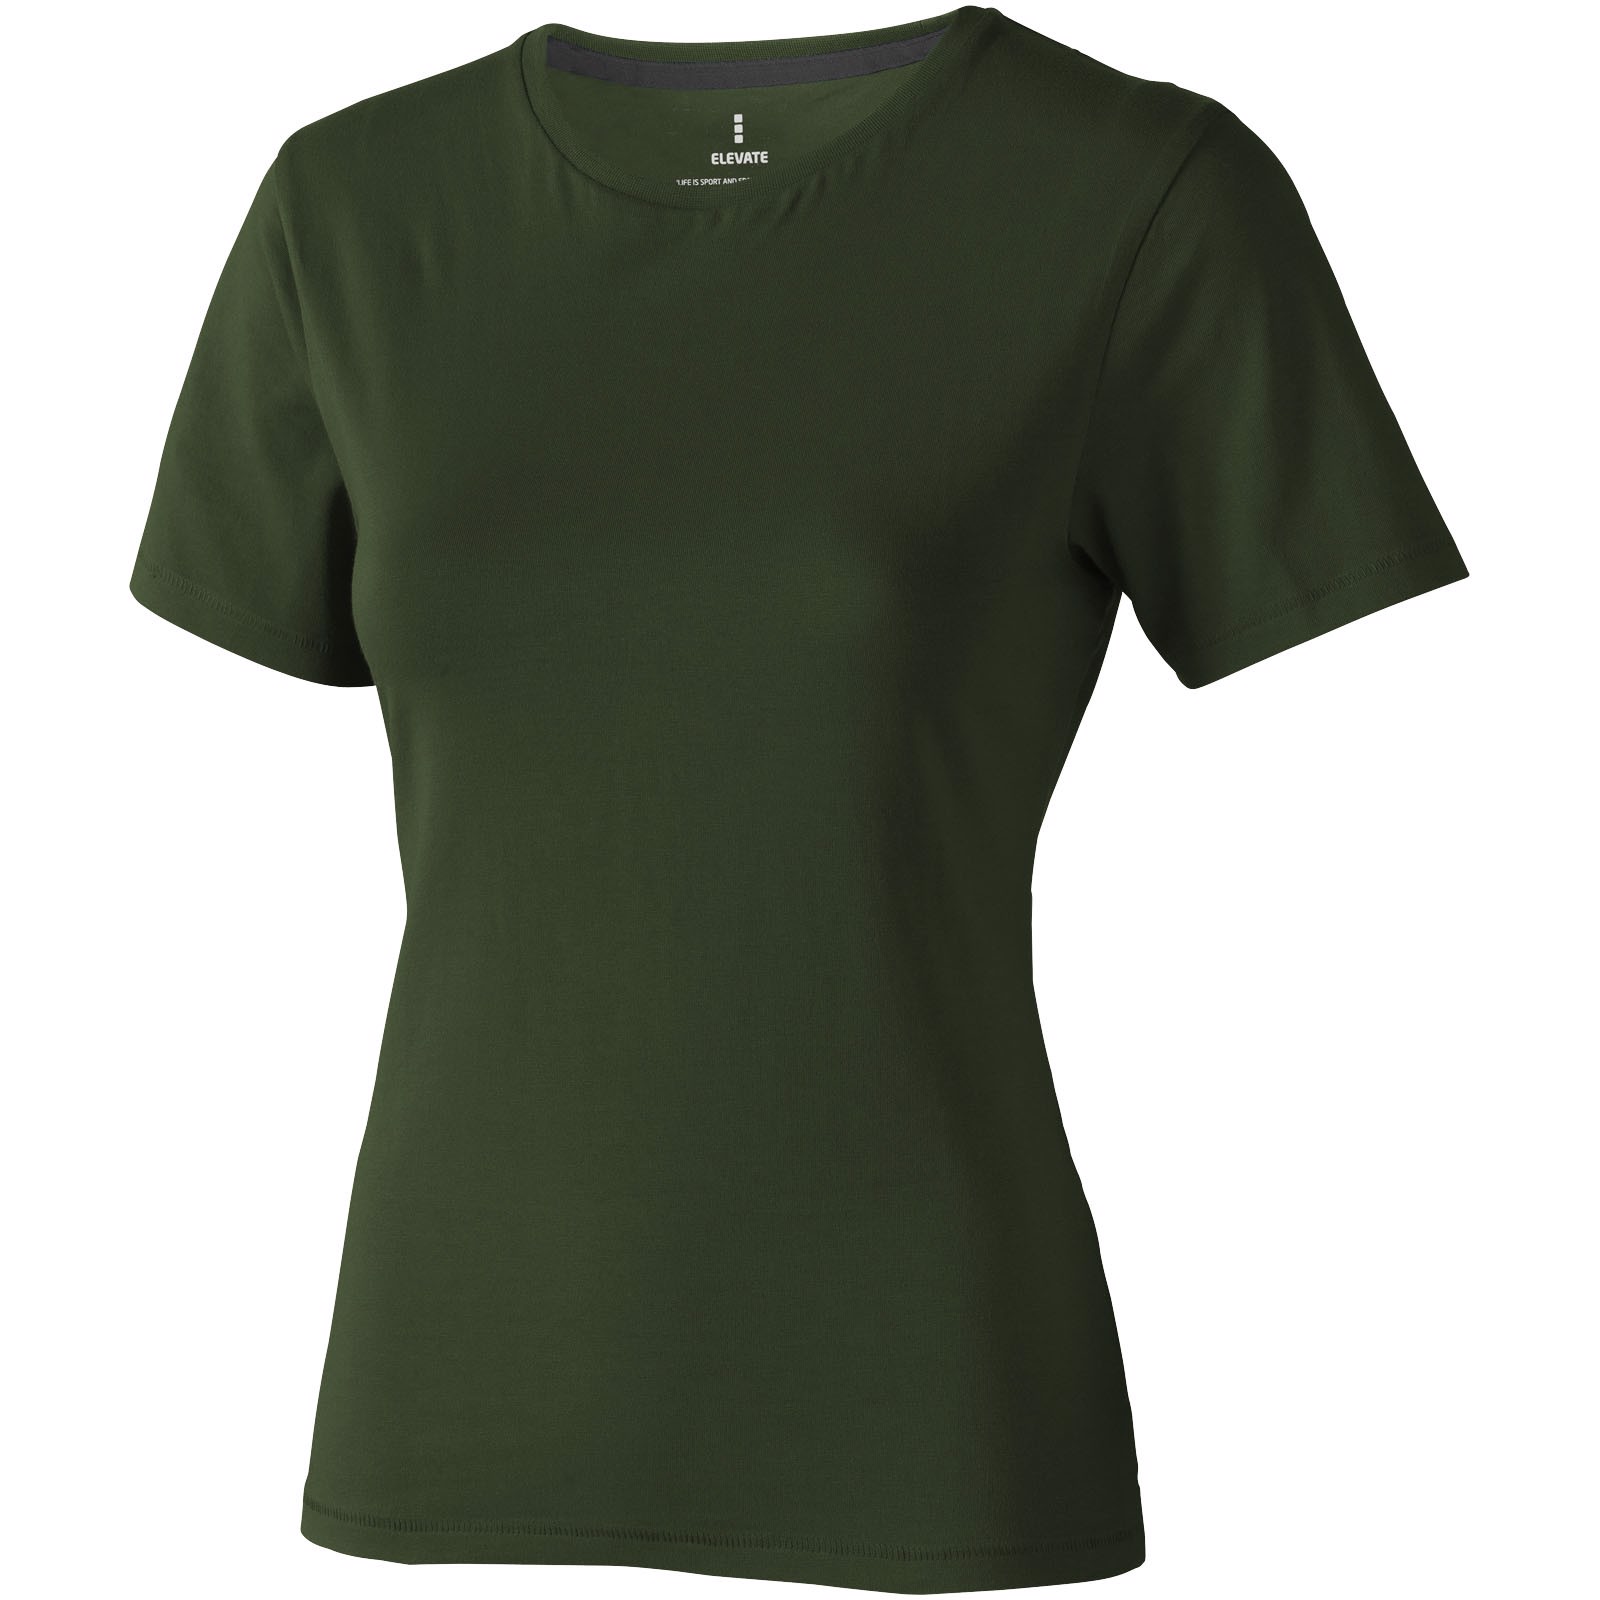 Nanaimo short sleeve women's T-shirt - Army Green / S